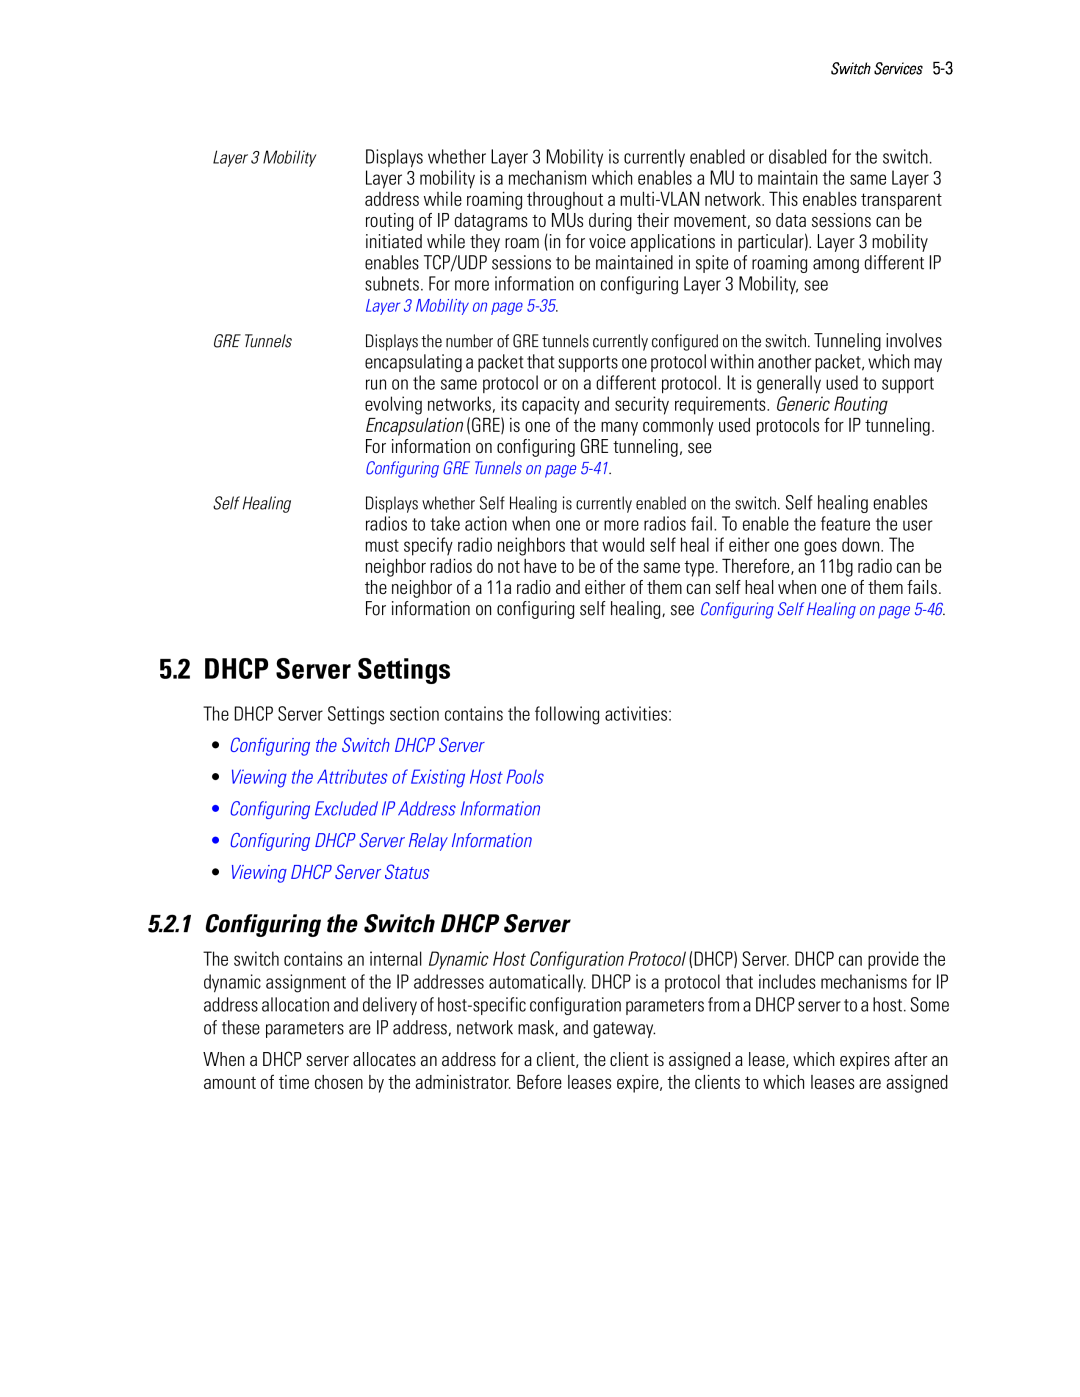 Motorola WS5100 manual DHCP Server Settings, 5.2.1Configuring the Switch DHCP Server, •Configuring the Switch DHCP Server 